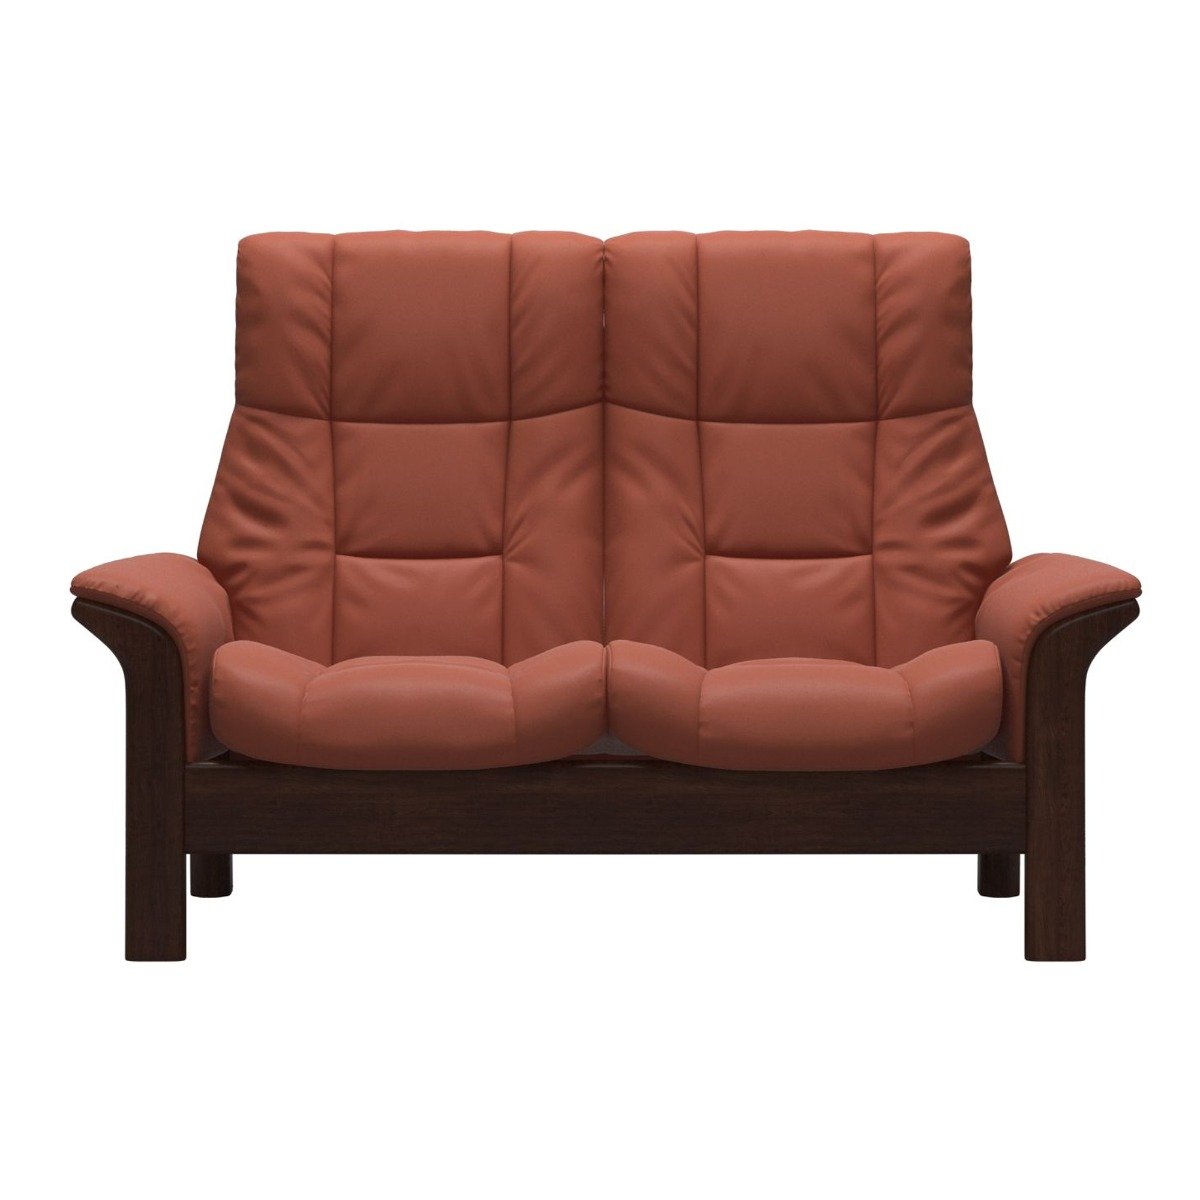 Stressless Windsor High Back 2 Seater Recliner Sofa, Orange Leather | Barker & Stonehouse